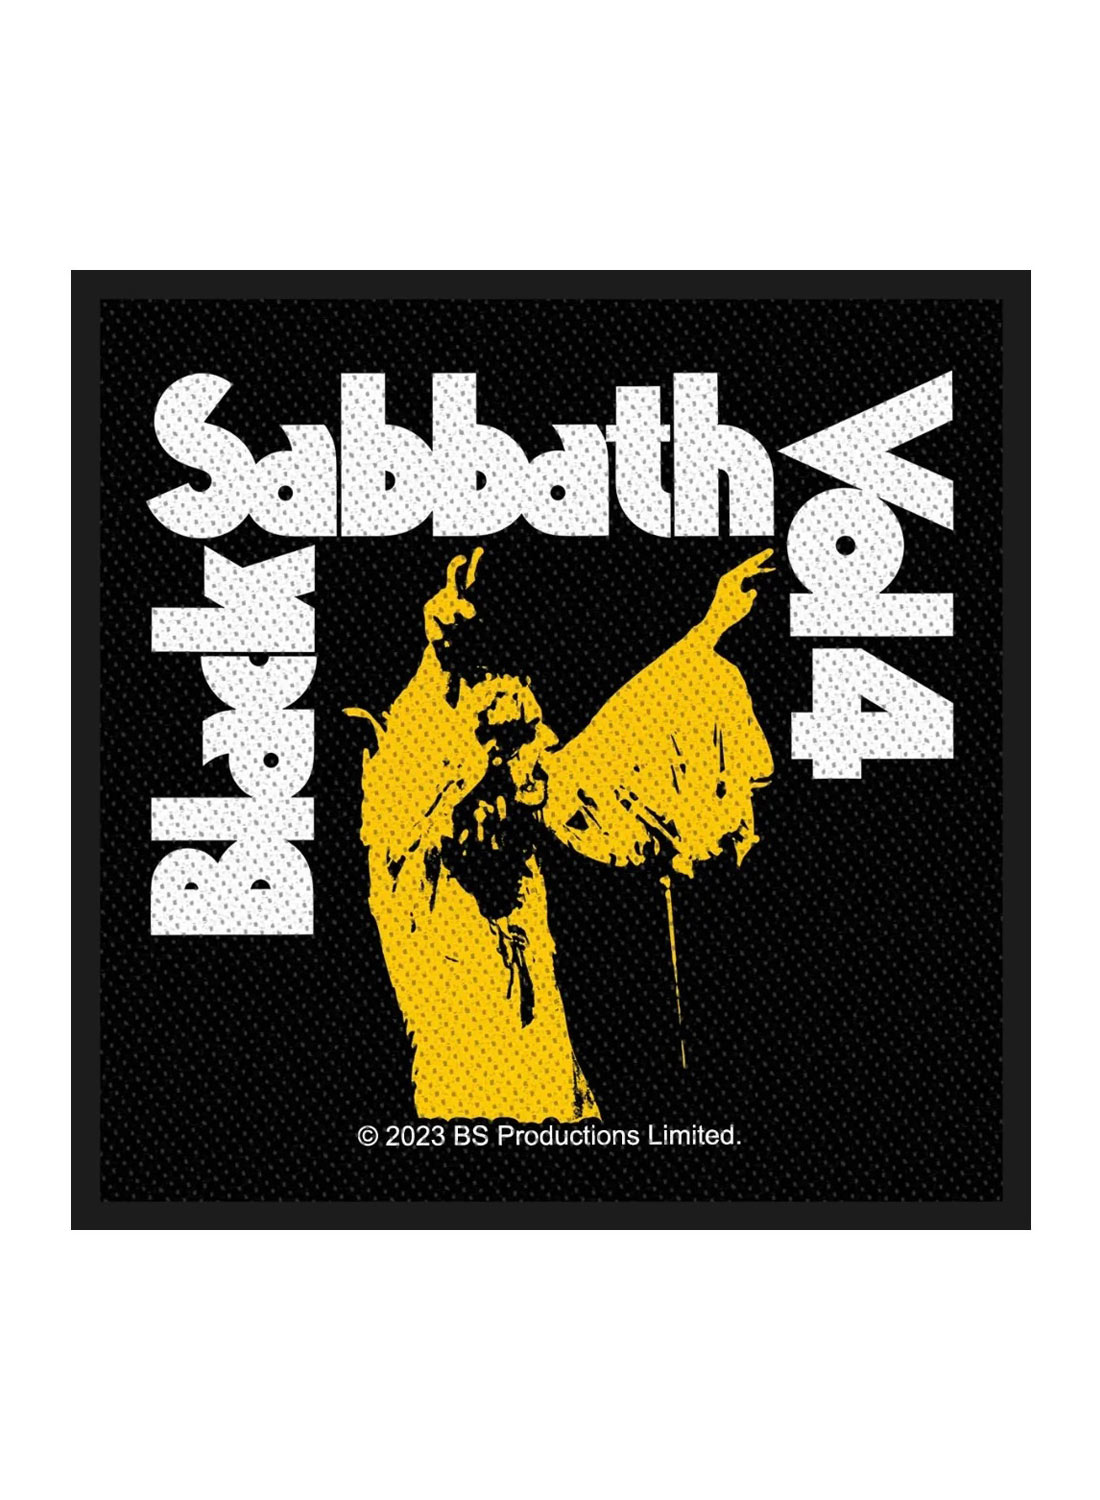 Black Sabbath Vol 4 Patch